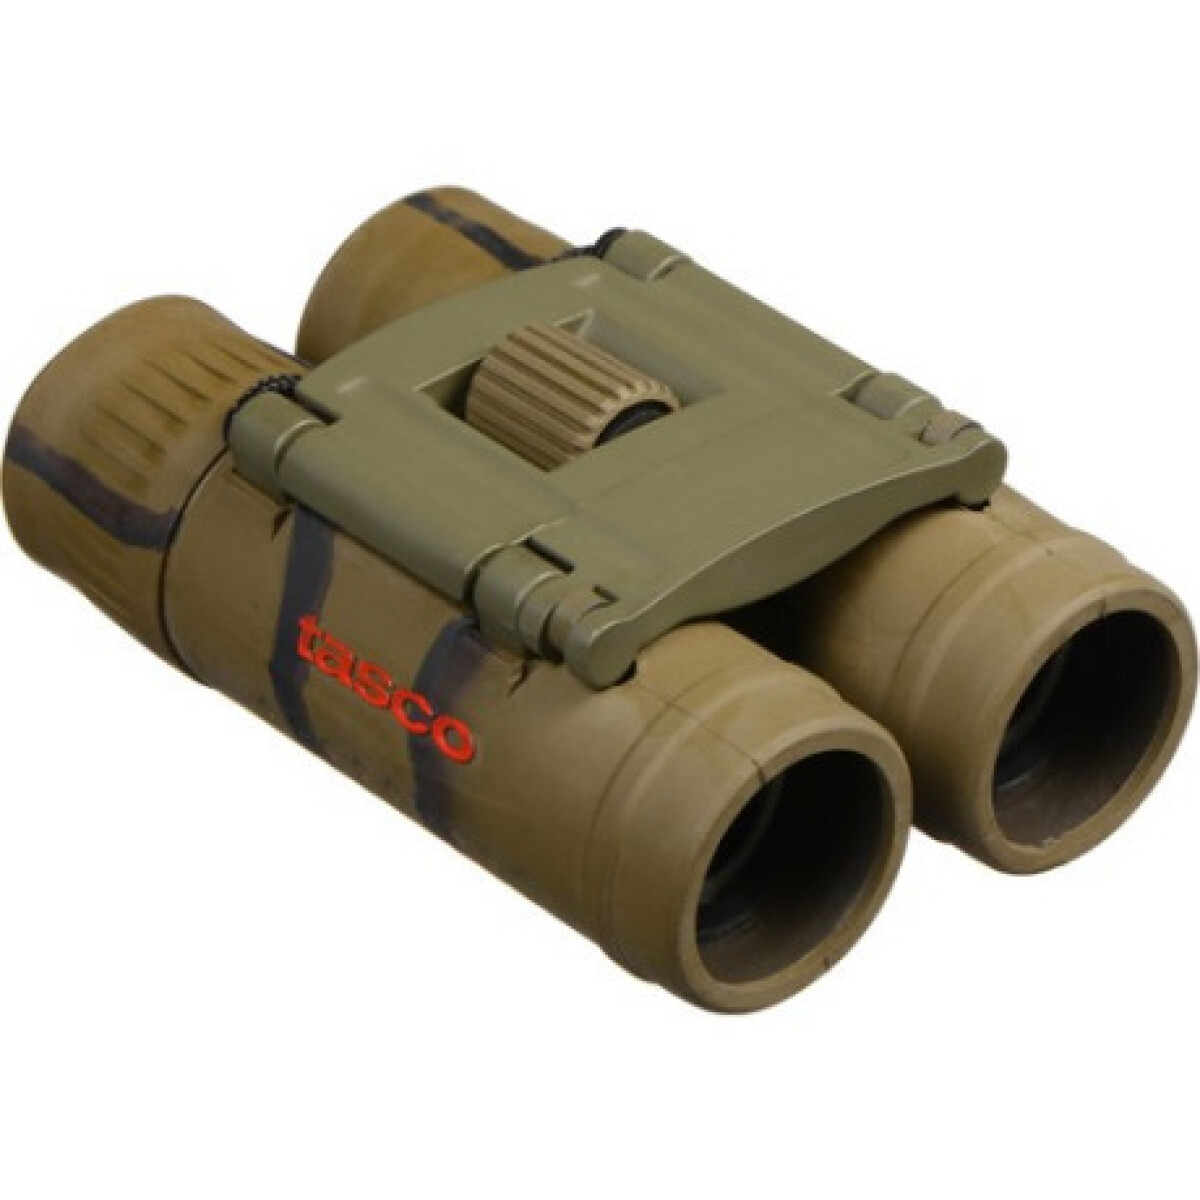 Binocular Tasco 8 X 21mm Camo 165821b 